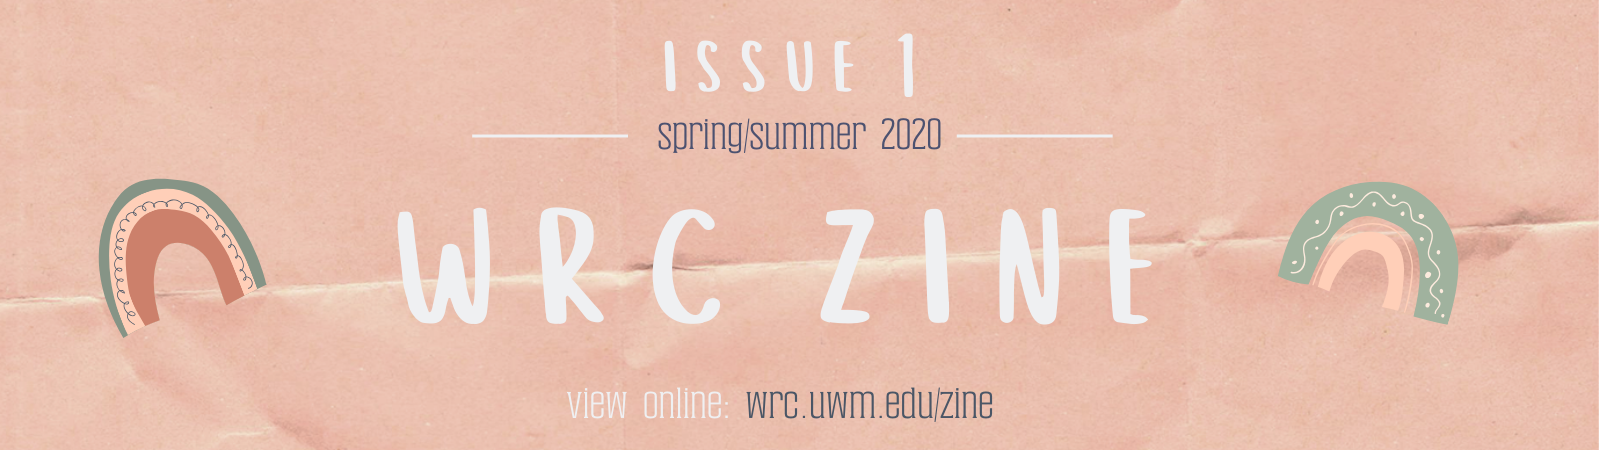 Issue 1 spring/summer 2020